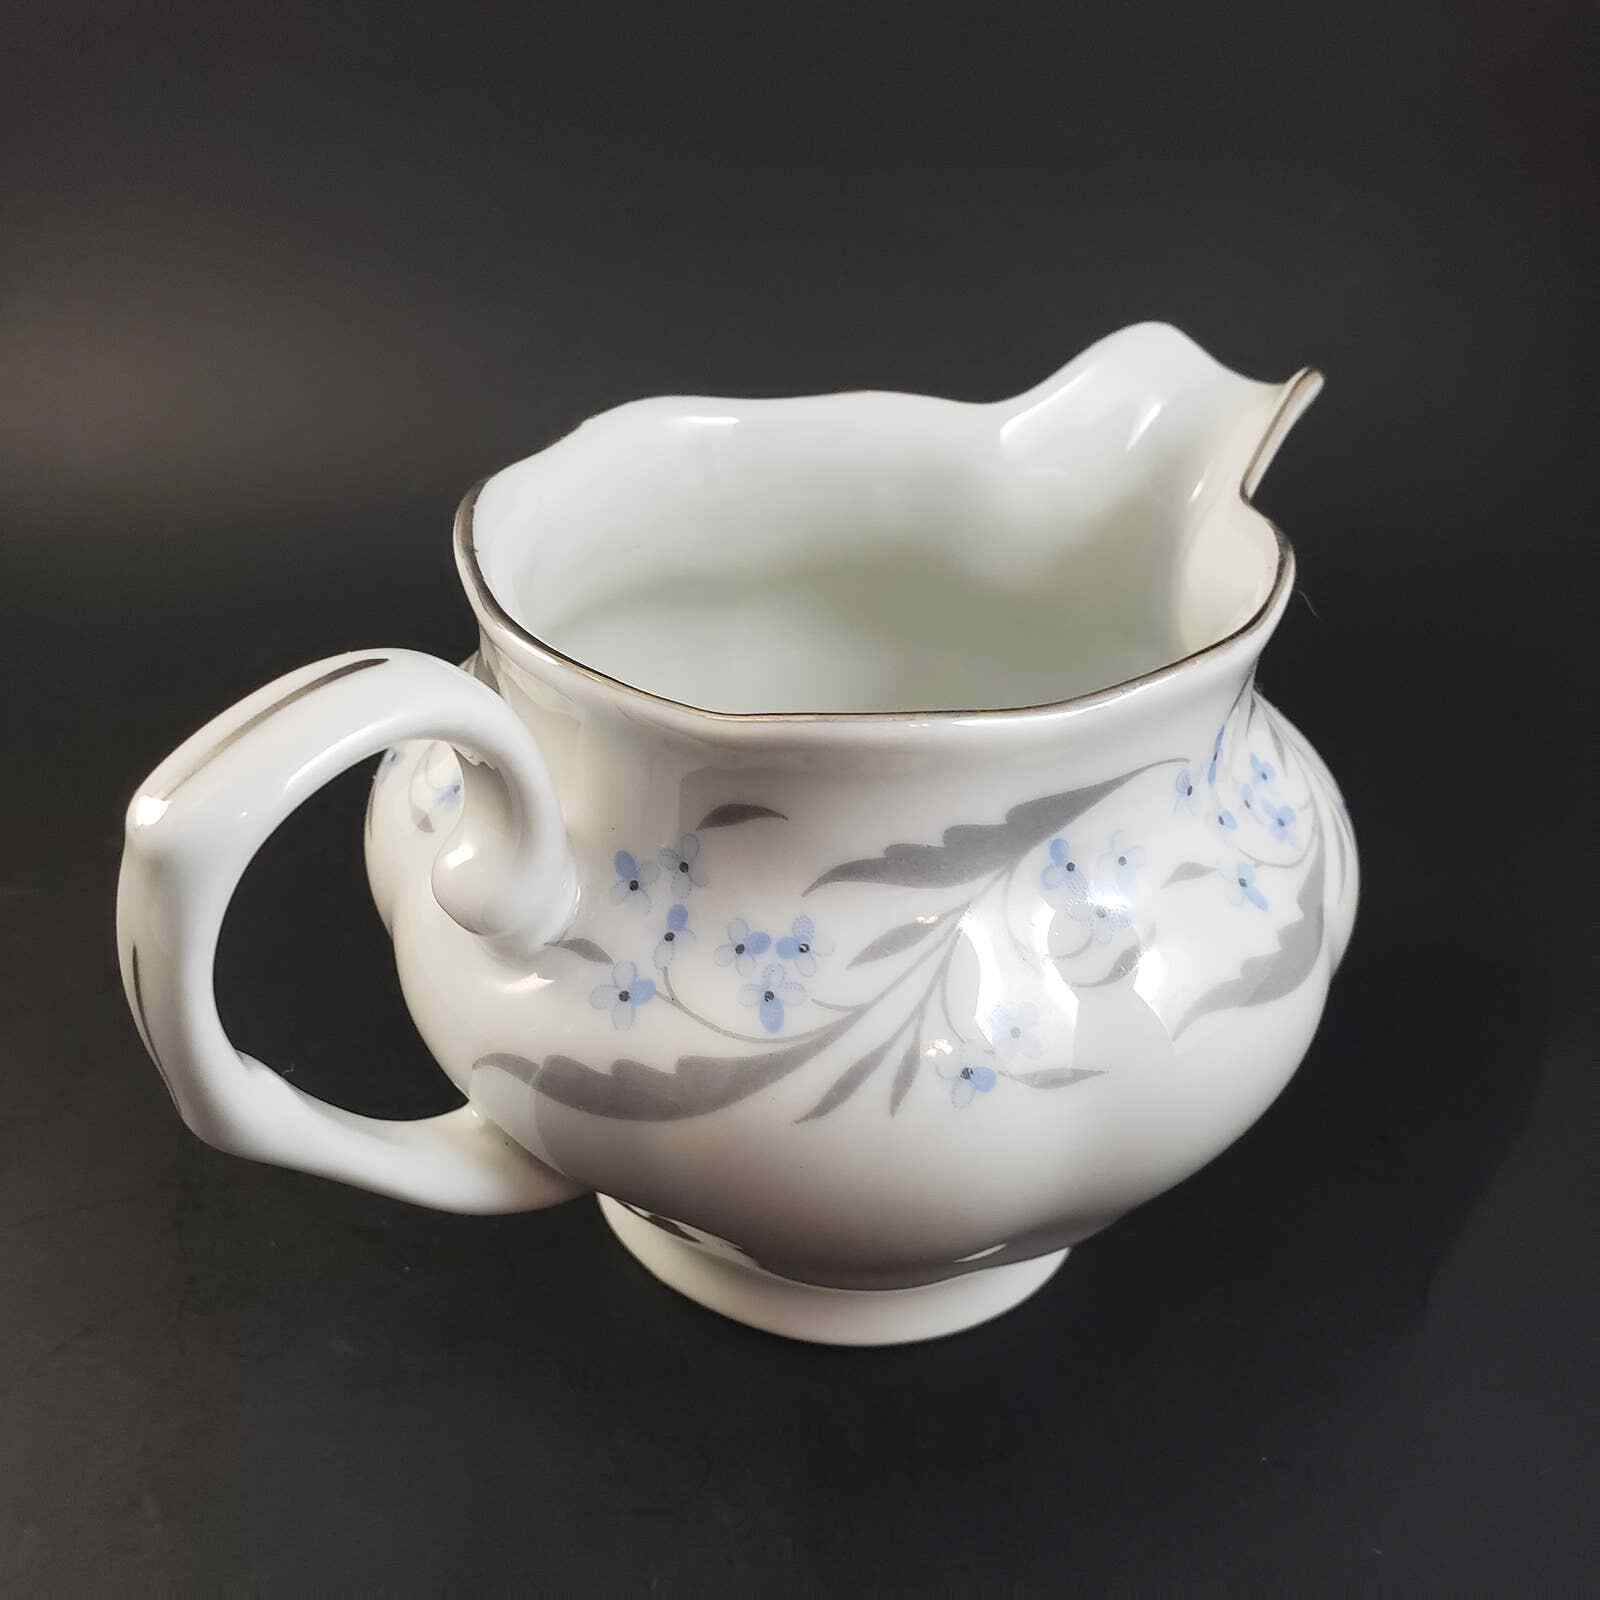 Viintage Favolina Ceramic Milk Creamer Pitcher White Blue Floral Gray Poland 